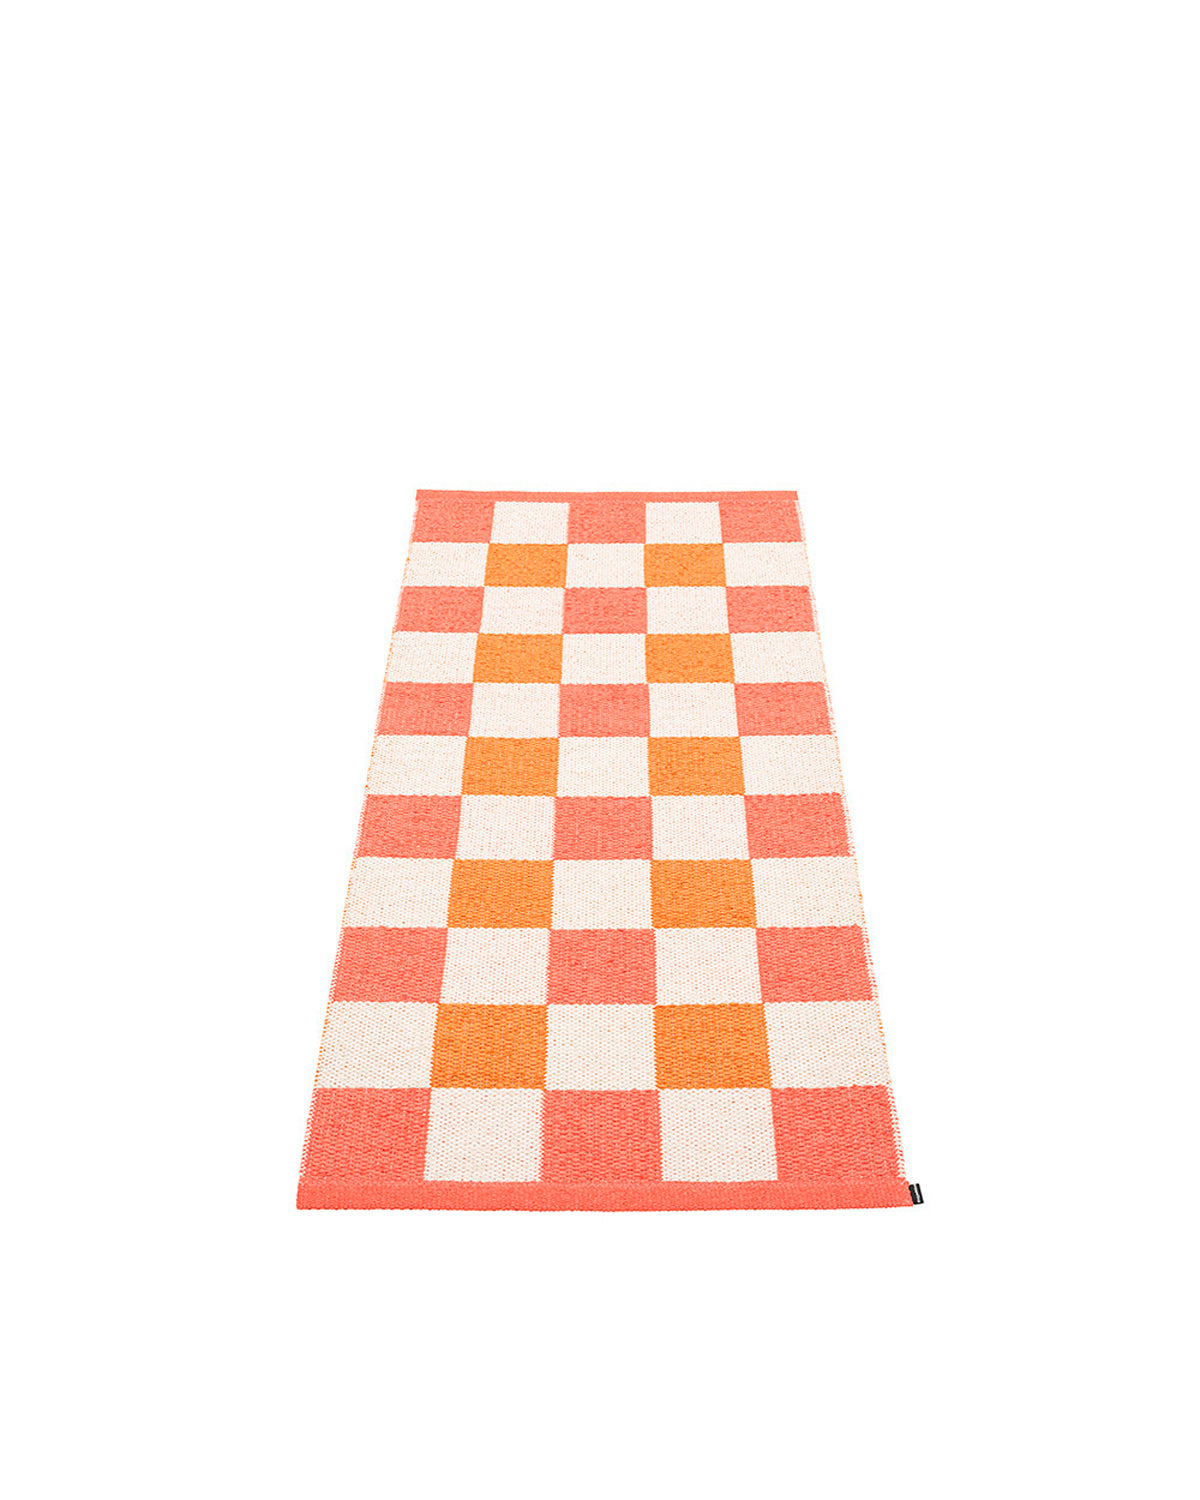 Pappelina Rug PIX Flamingo/Vanilla/Pale Orange 2.25 x 5.25 ft  image 1